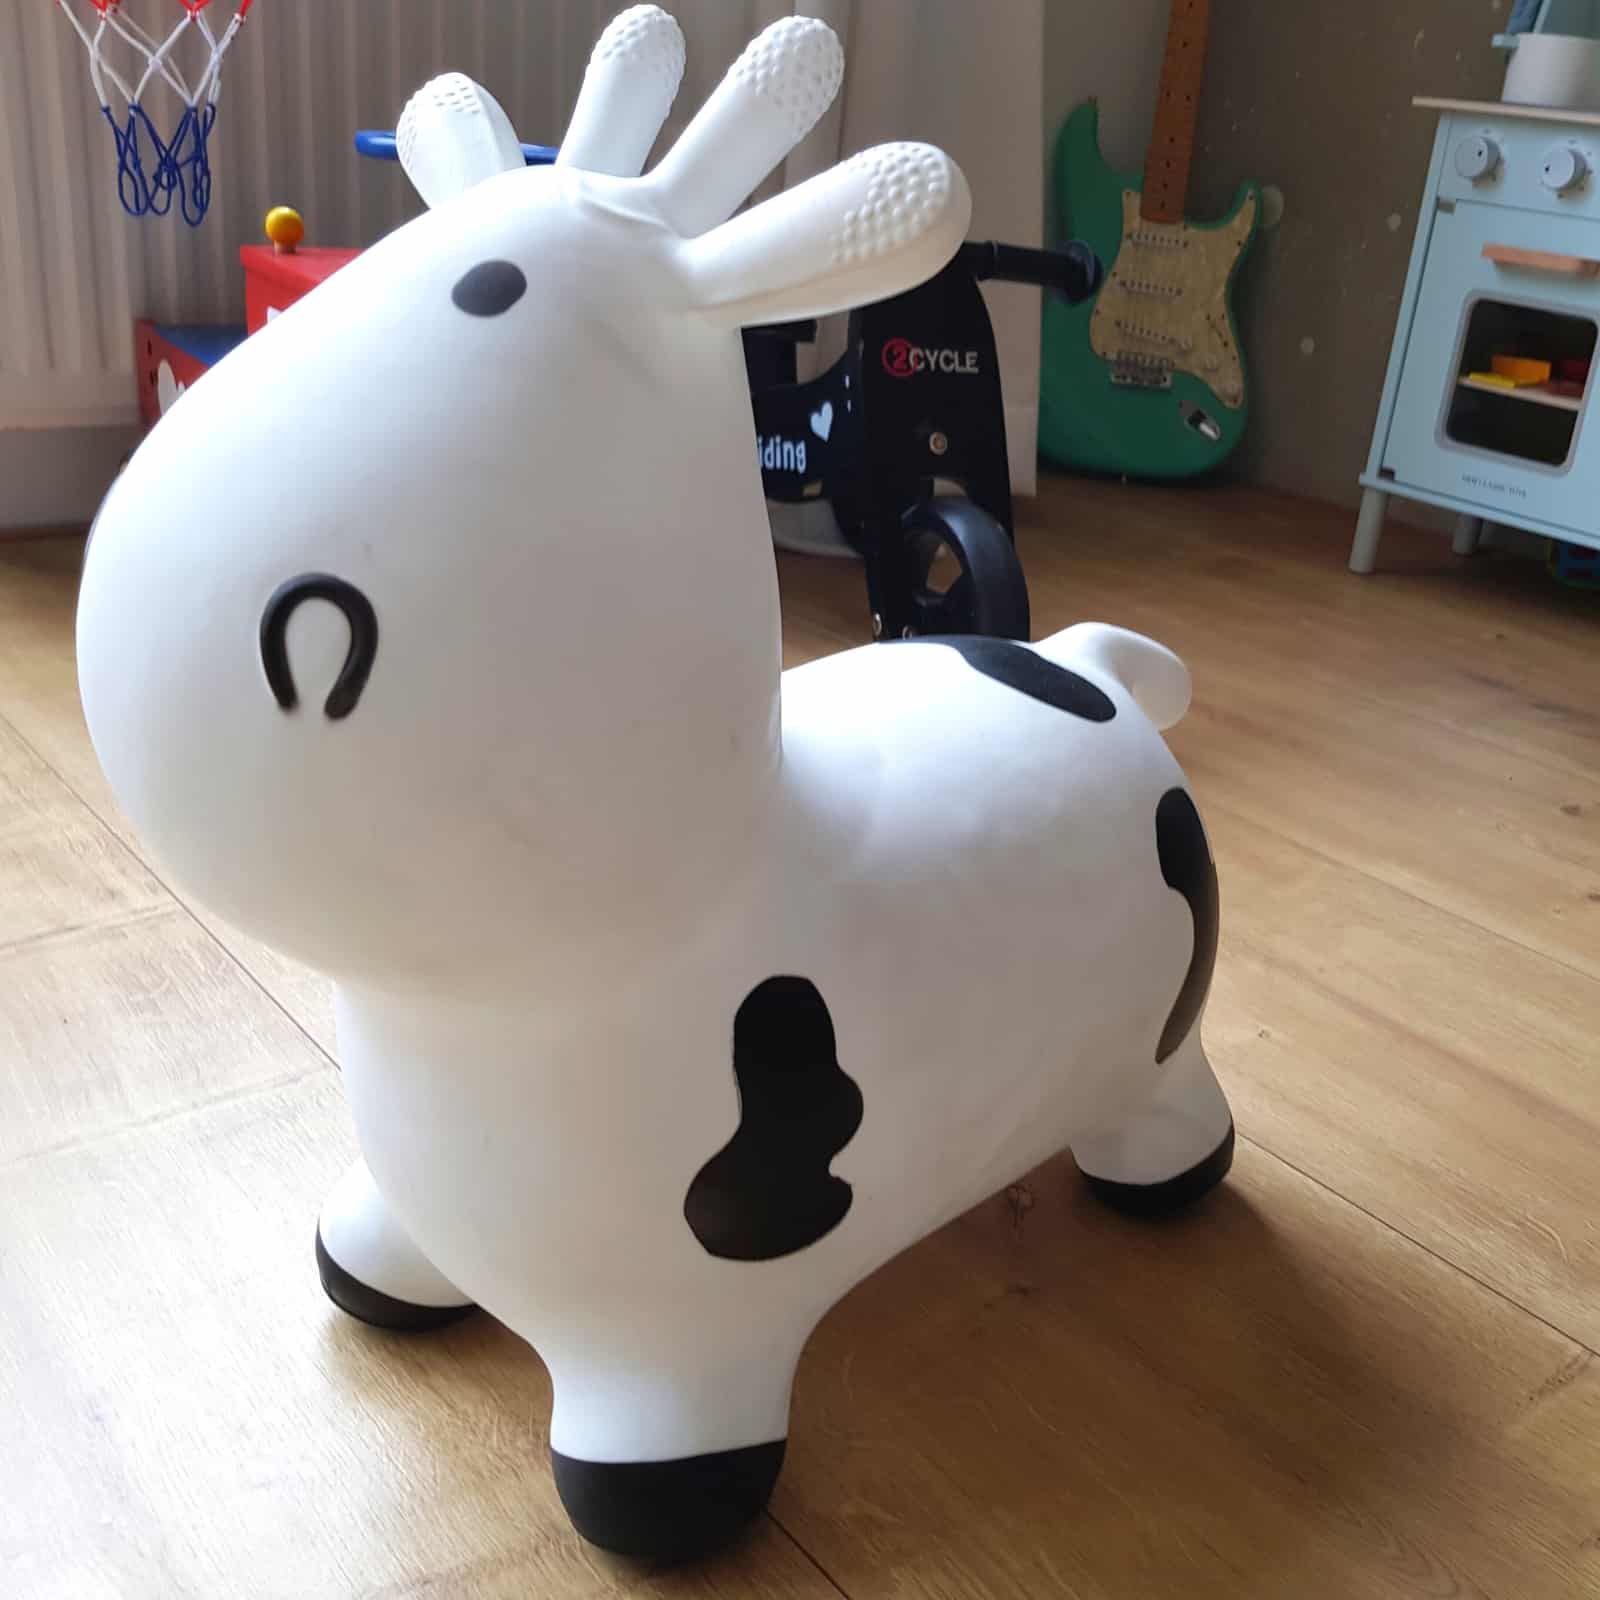 Bs Toys bumpy cow